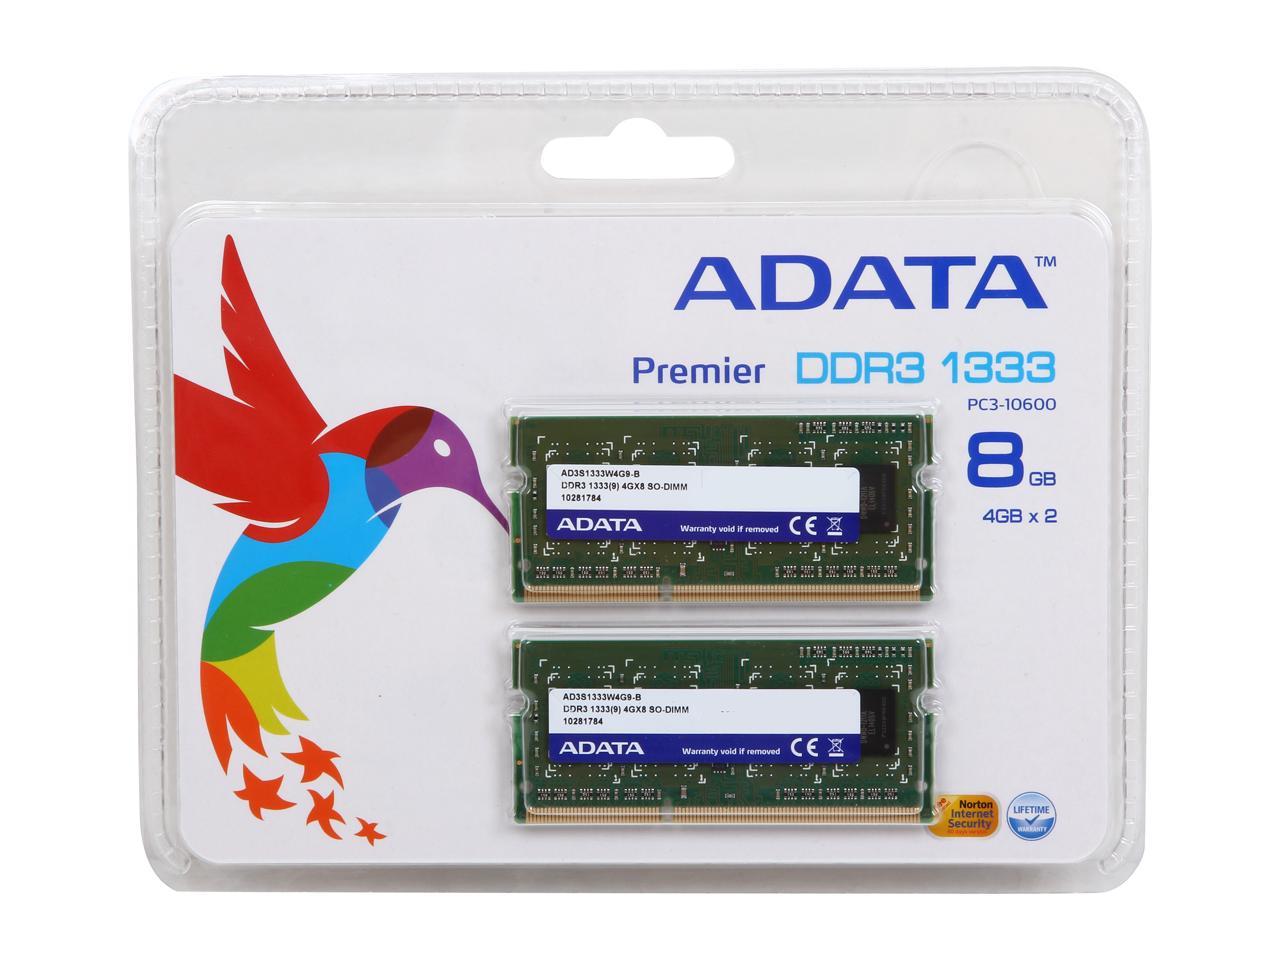 Premier Series 8GB (2 x 4GB) 204-Pin DDR3 SO-DIMM DDR3 1333 Laptop Memory Model AD3S1333W4G9-2